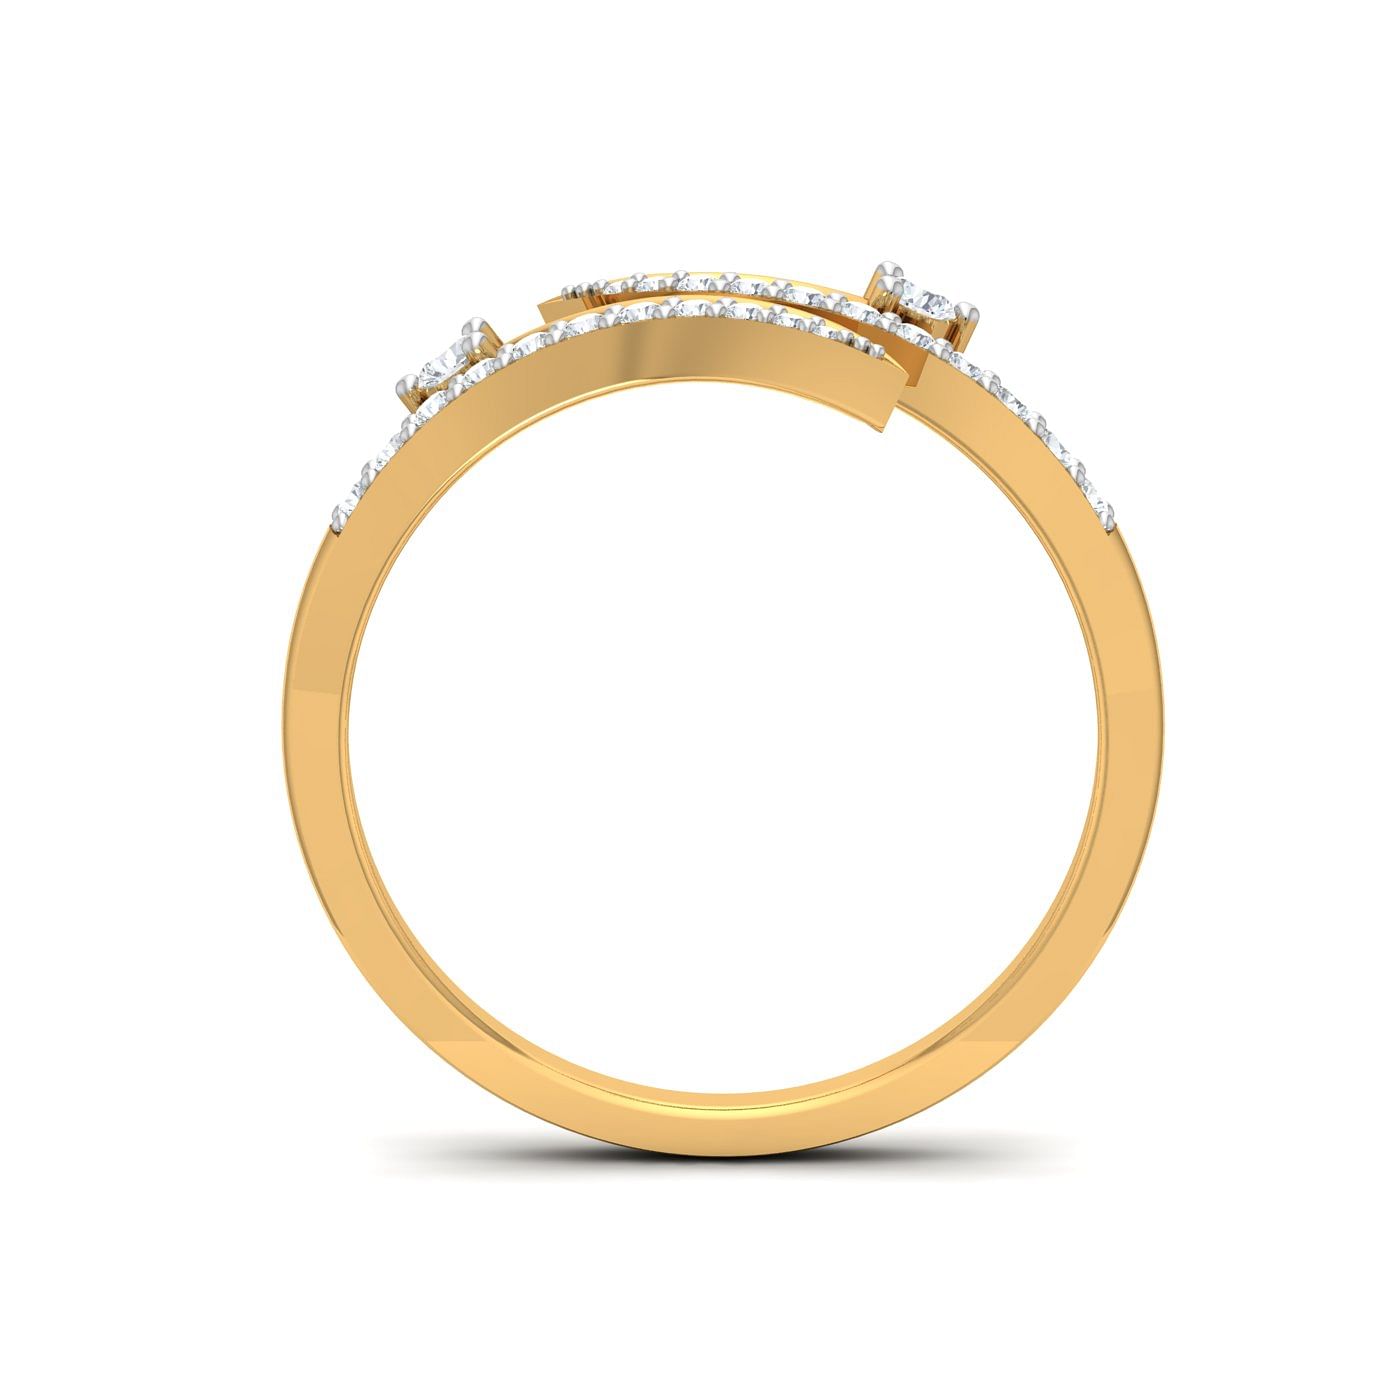 Round 18kt Yellow Gold Diamond Ladies Ring, Weight: 2 Gms at Rs 16500 in  Mumbai